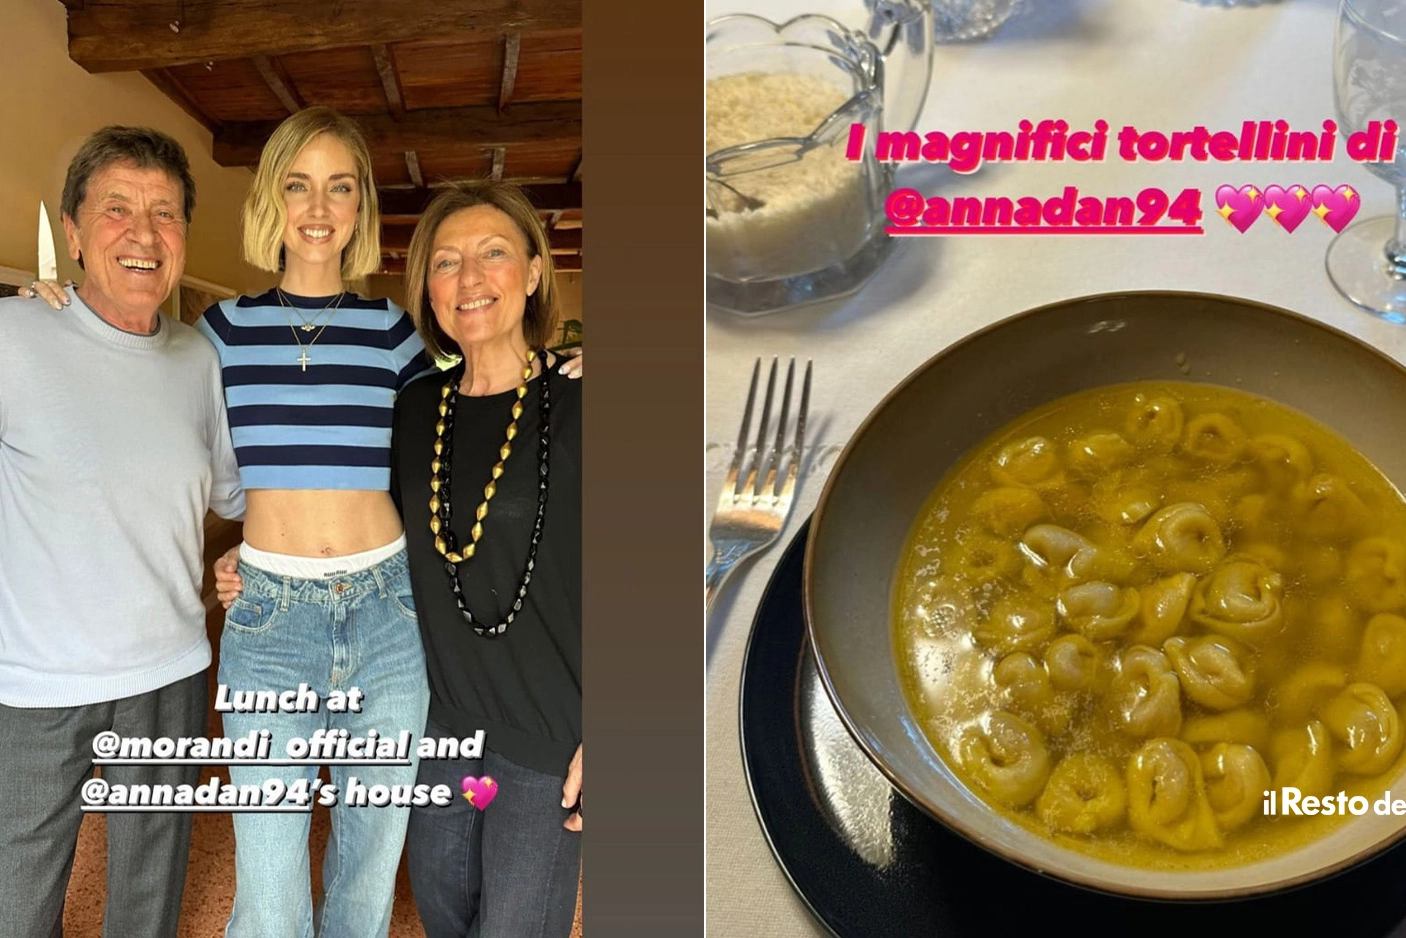 Le storie su Instagram di Chiara Ferragni, ospite a casa di Gianni Morandi e Anna Dan